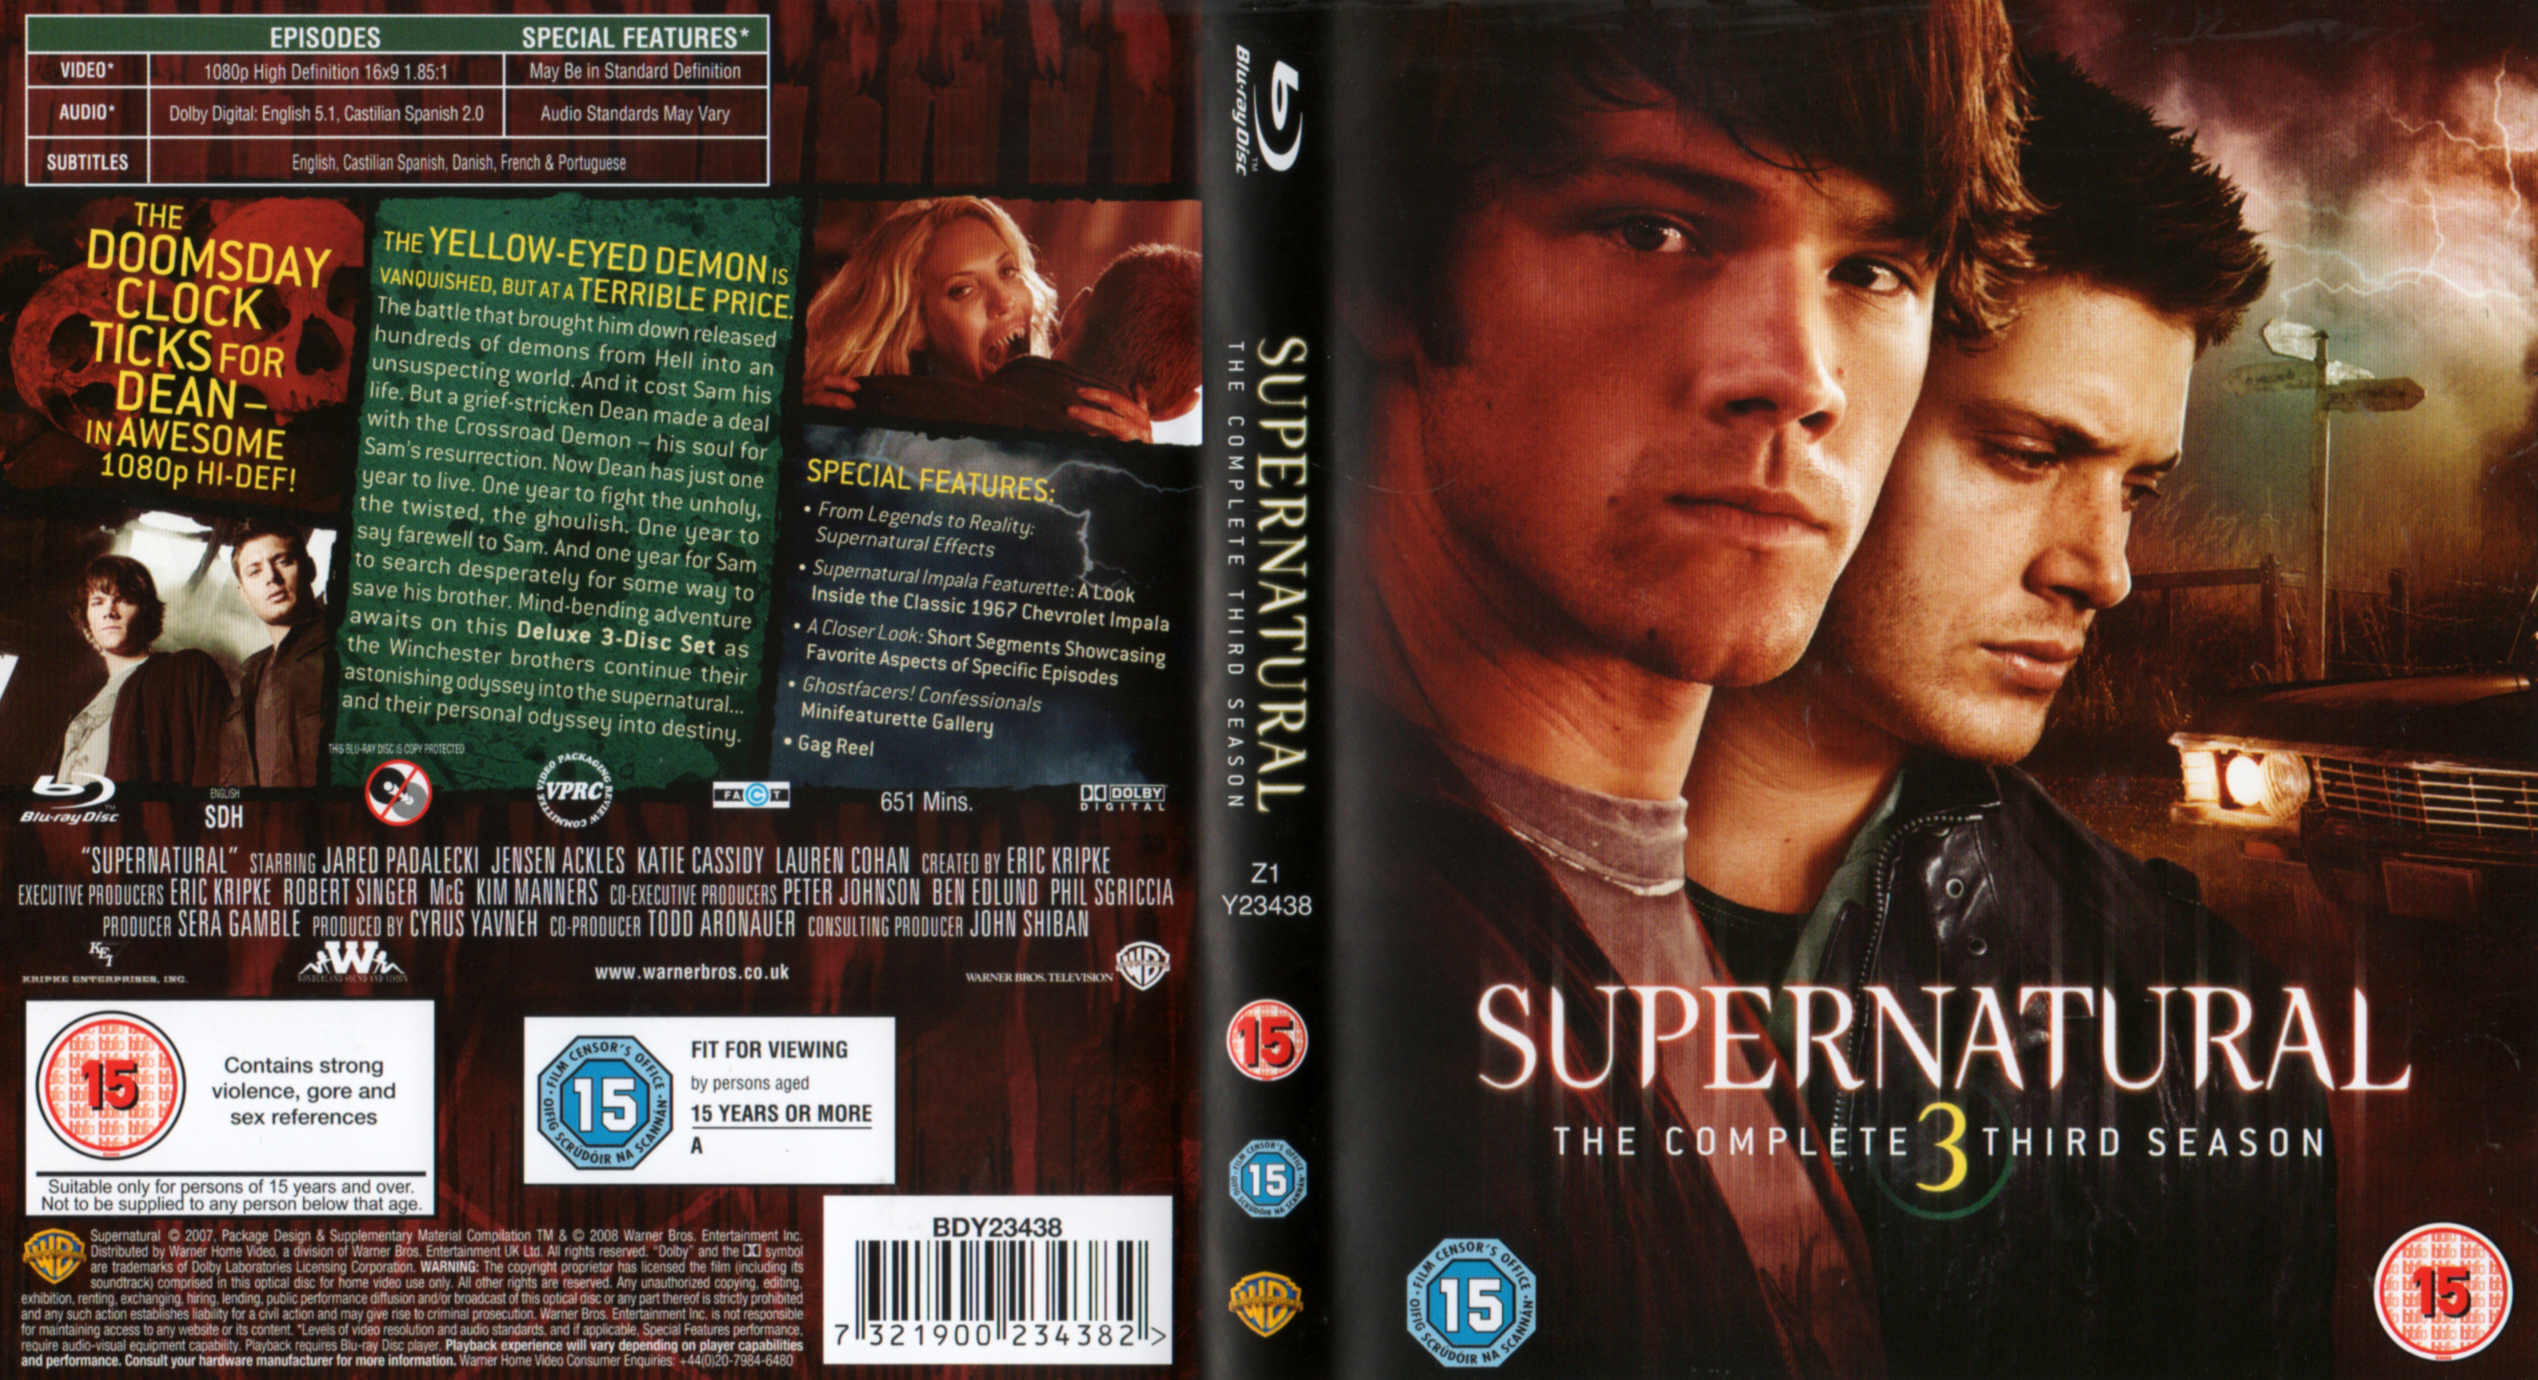 Jaquette DVD Supernatural saison 3 COFFRET Zone 1 (BLU-RAY)